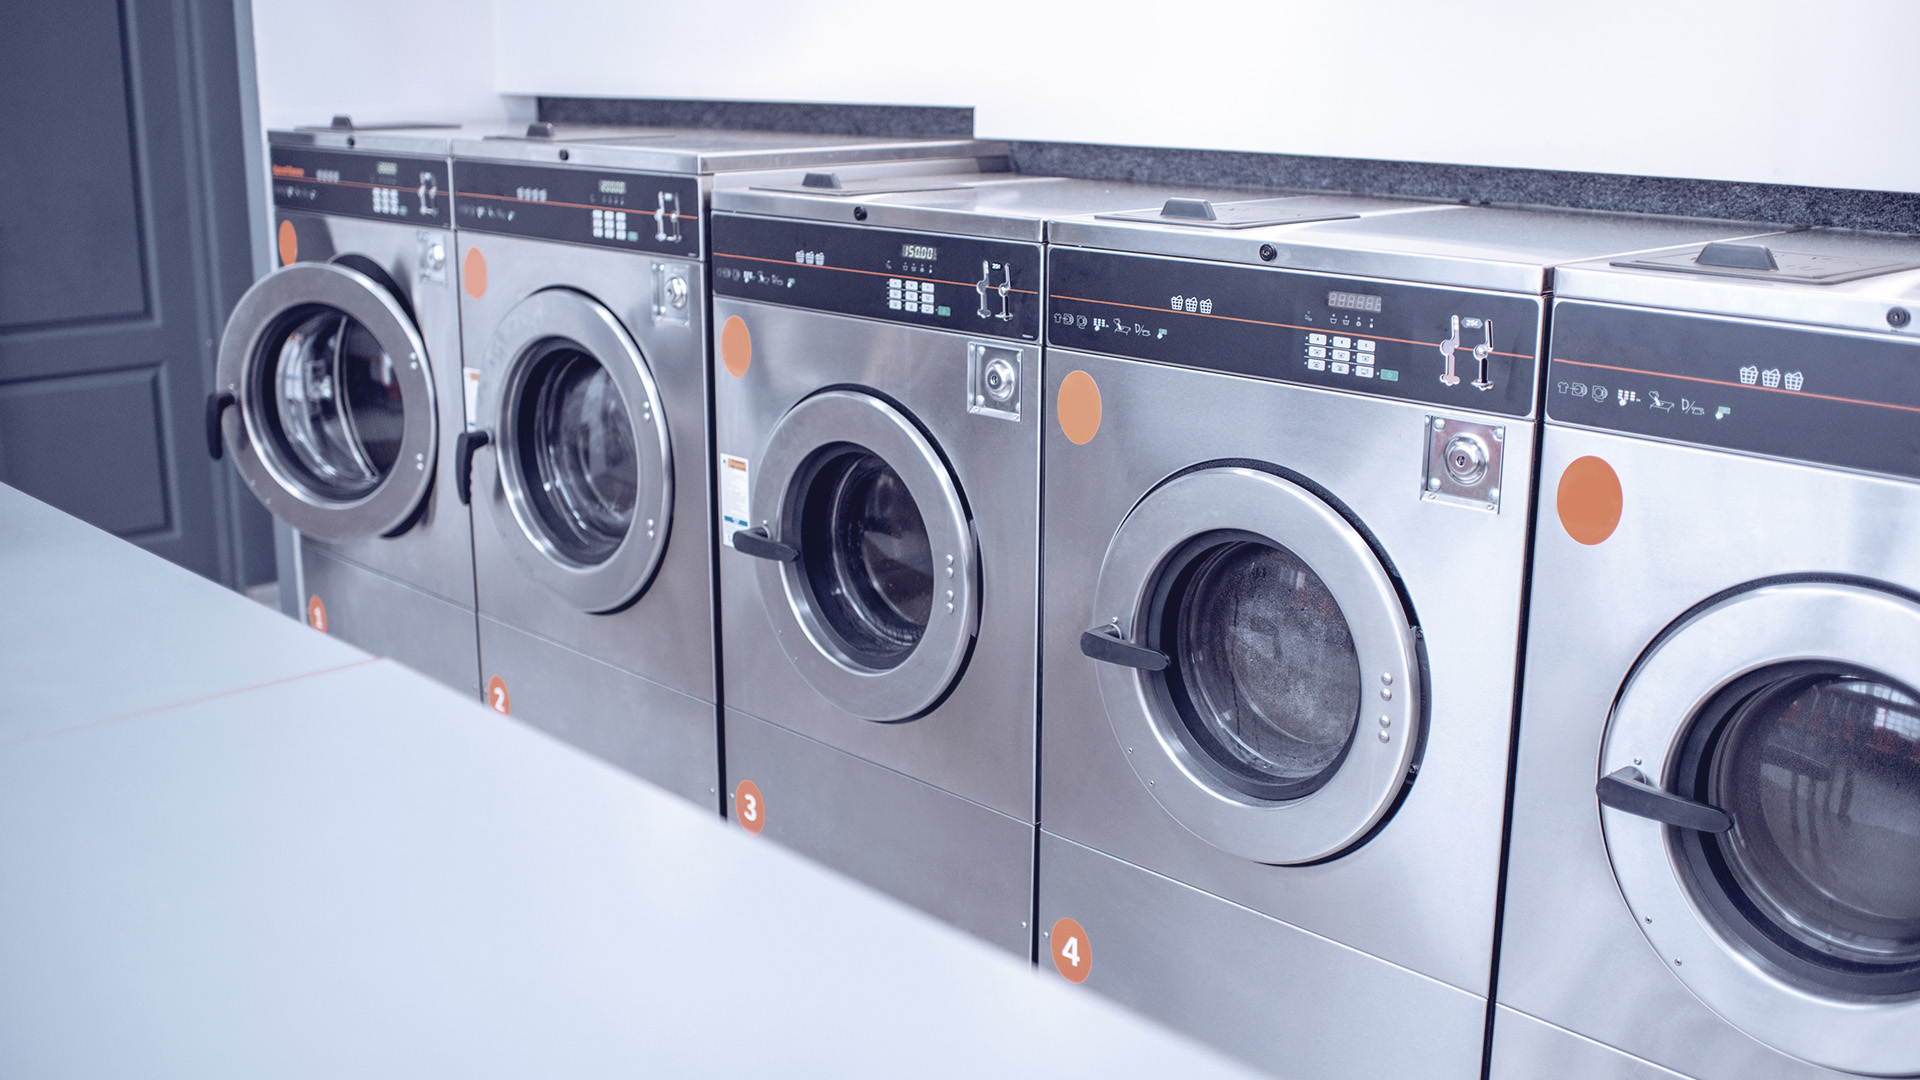 lavanderia compartilhada - lavanderia coletiva - lavanderia compartilhada em condomínio - lavanderia em condomínio